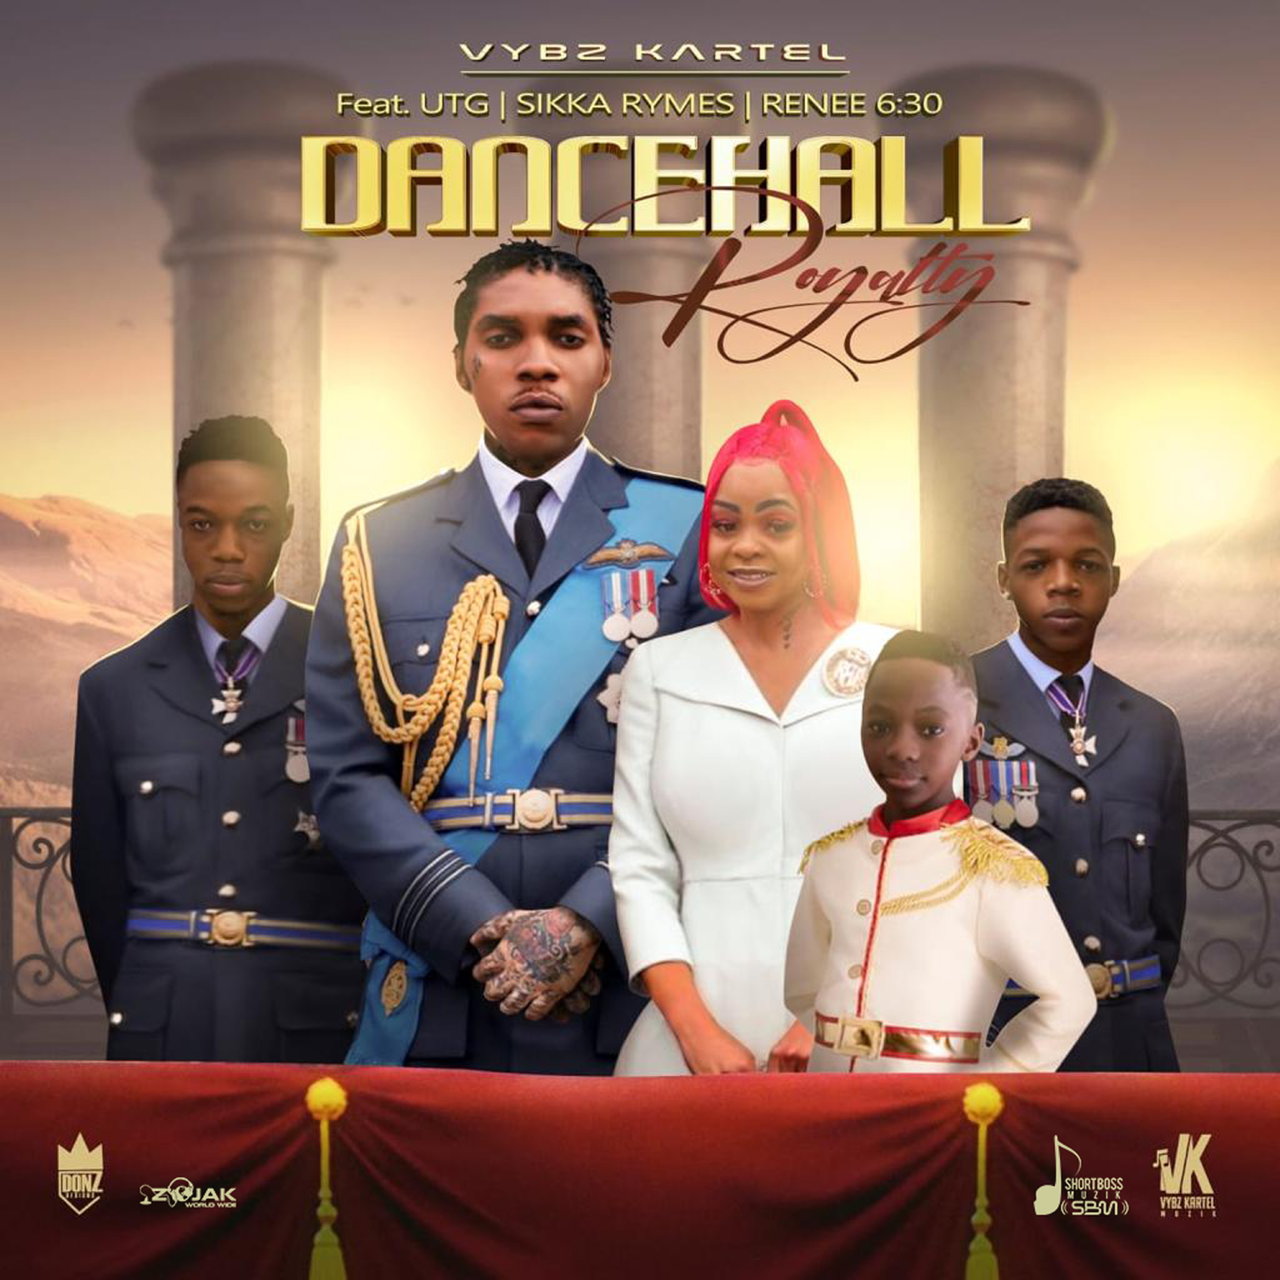 Vybz Kartel - Dancehall Royalty (Cover)